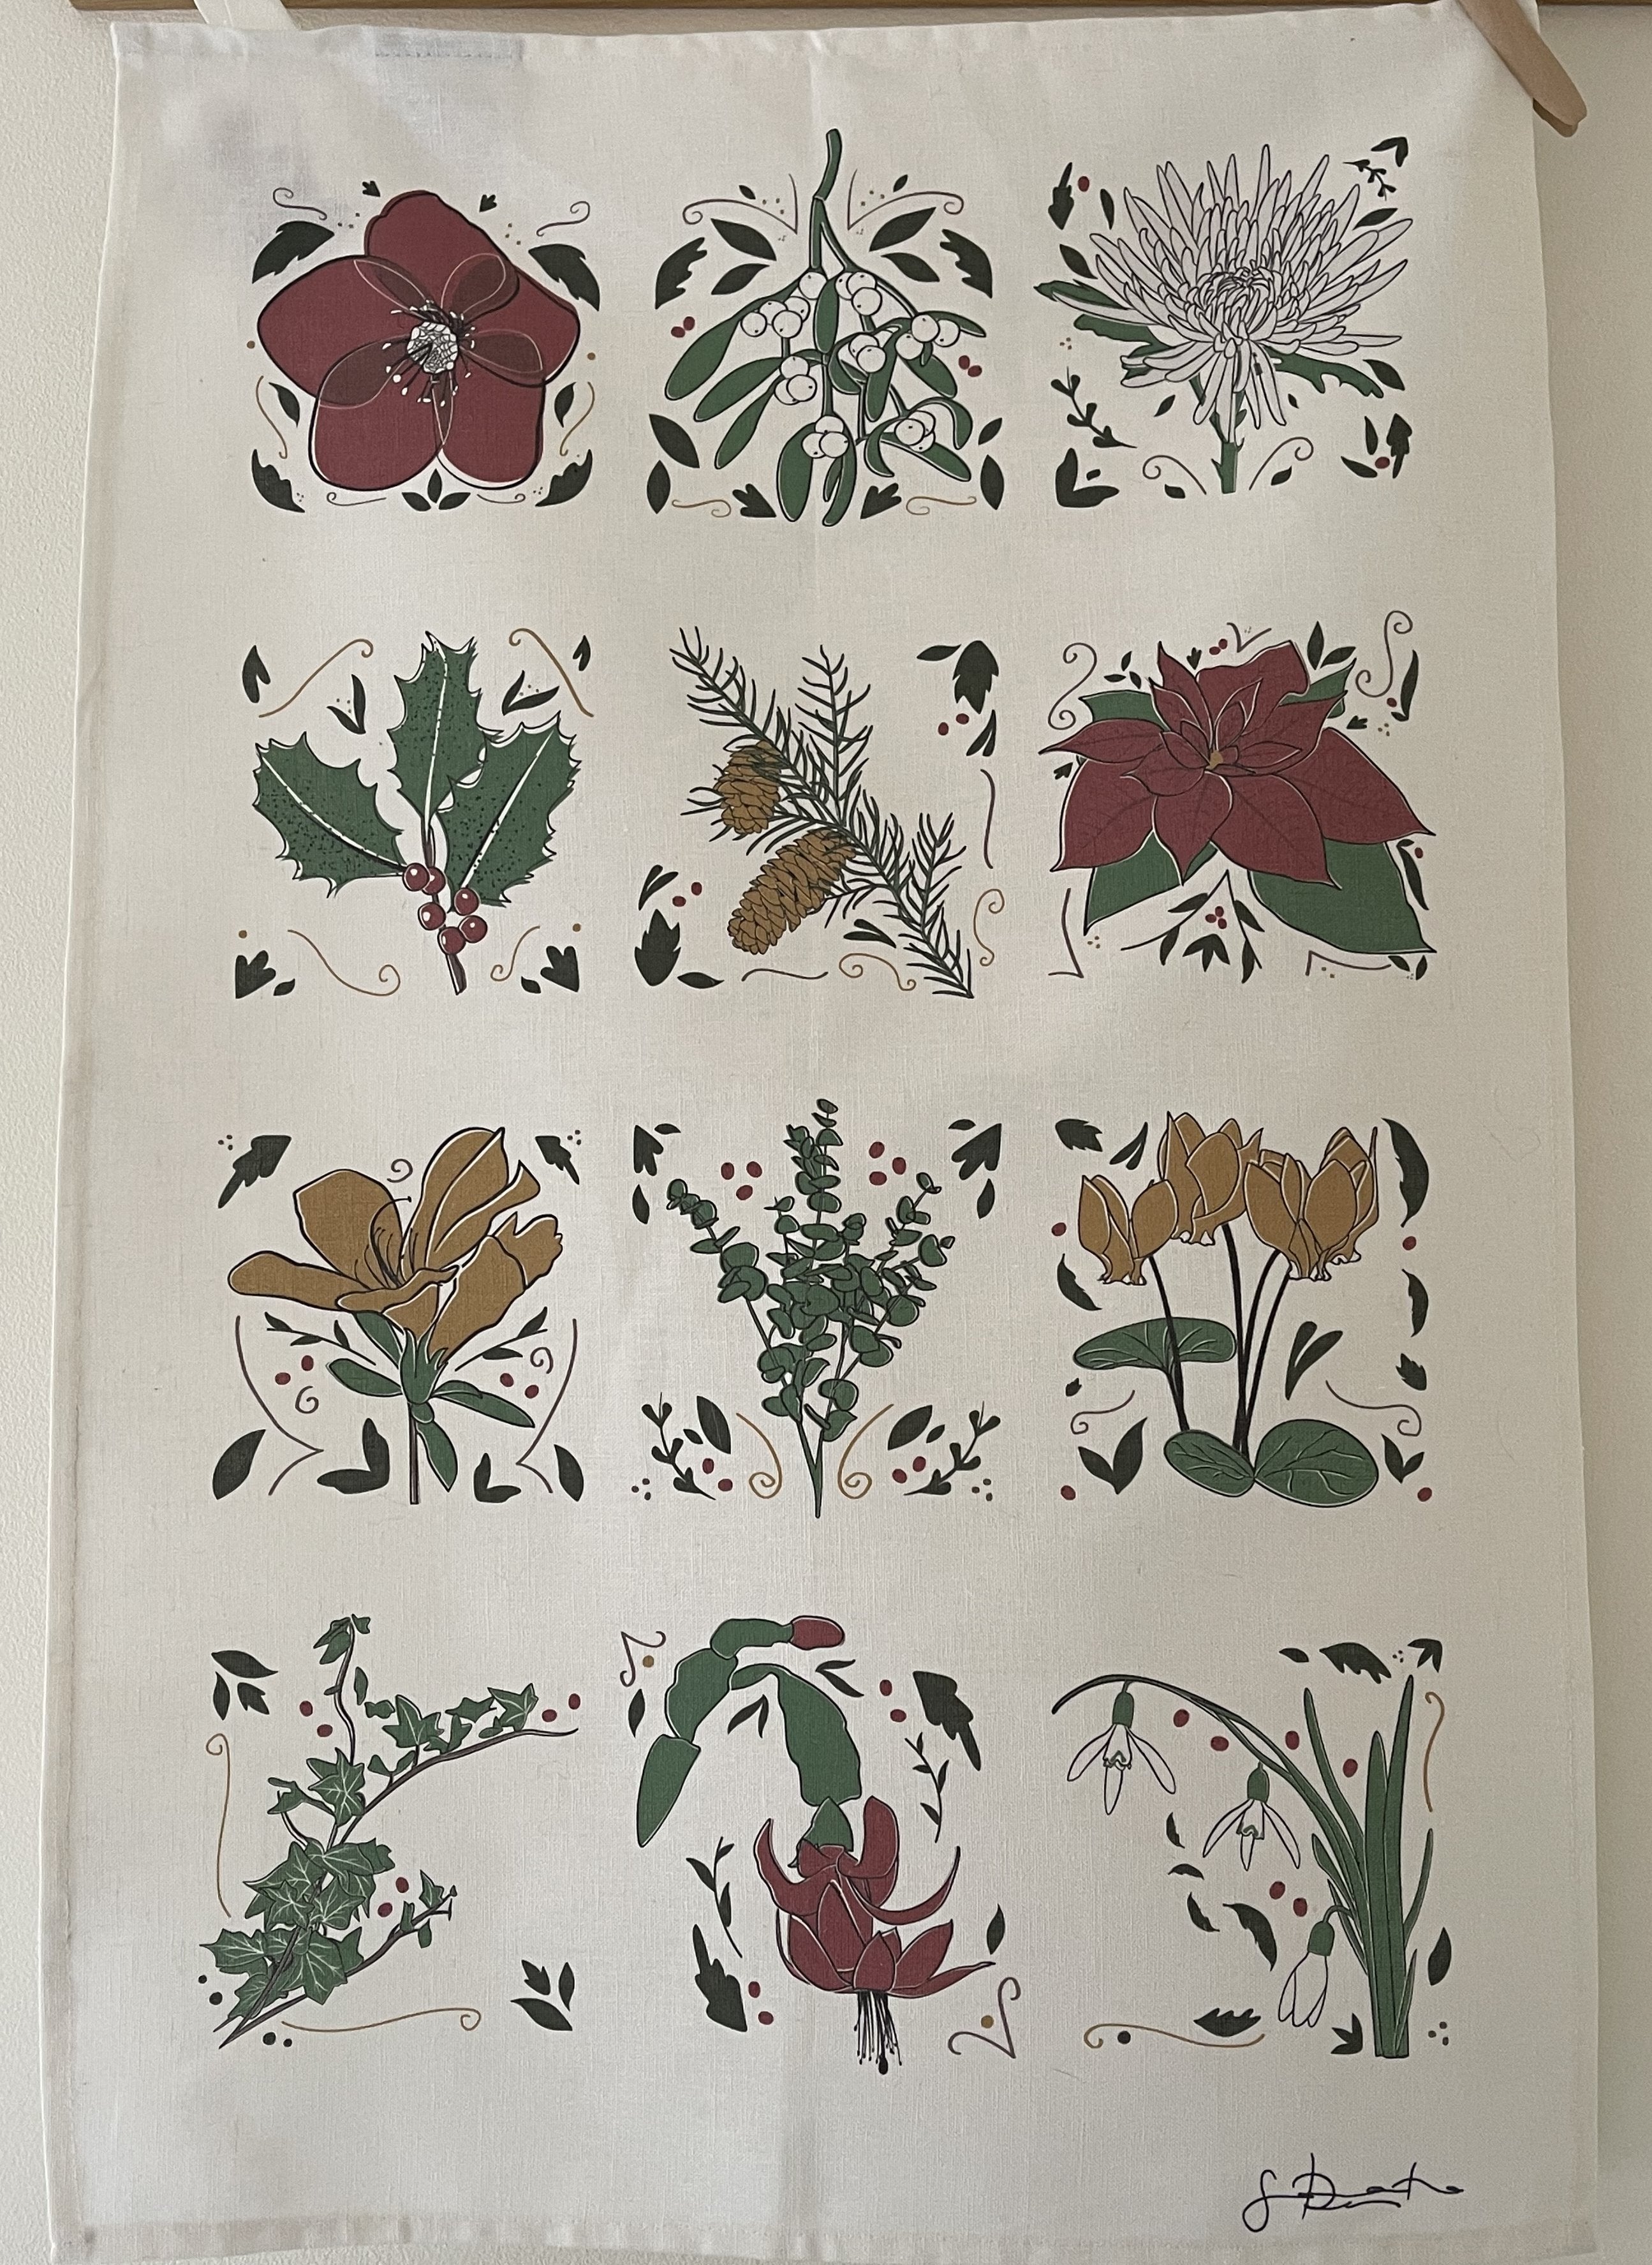 Home-Landing, “12 Florals of Christmas”, Linen union tea towel. UK printed.